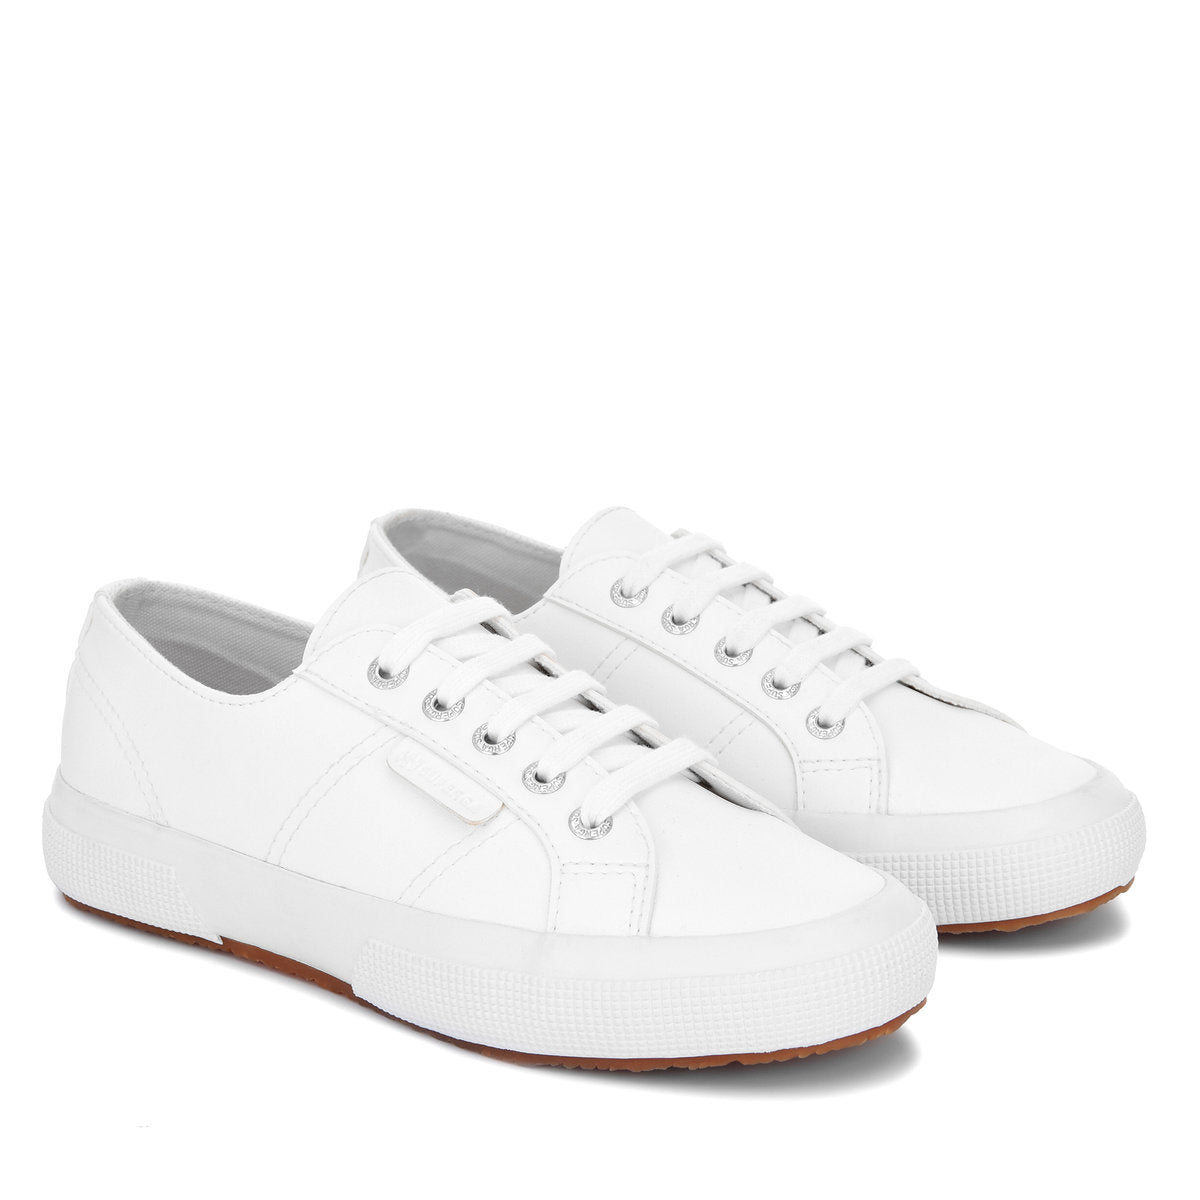 Superga Men's 2750 Corn Based Leather Sneakers White